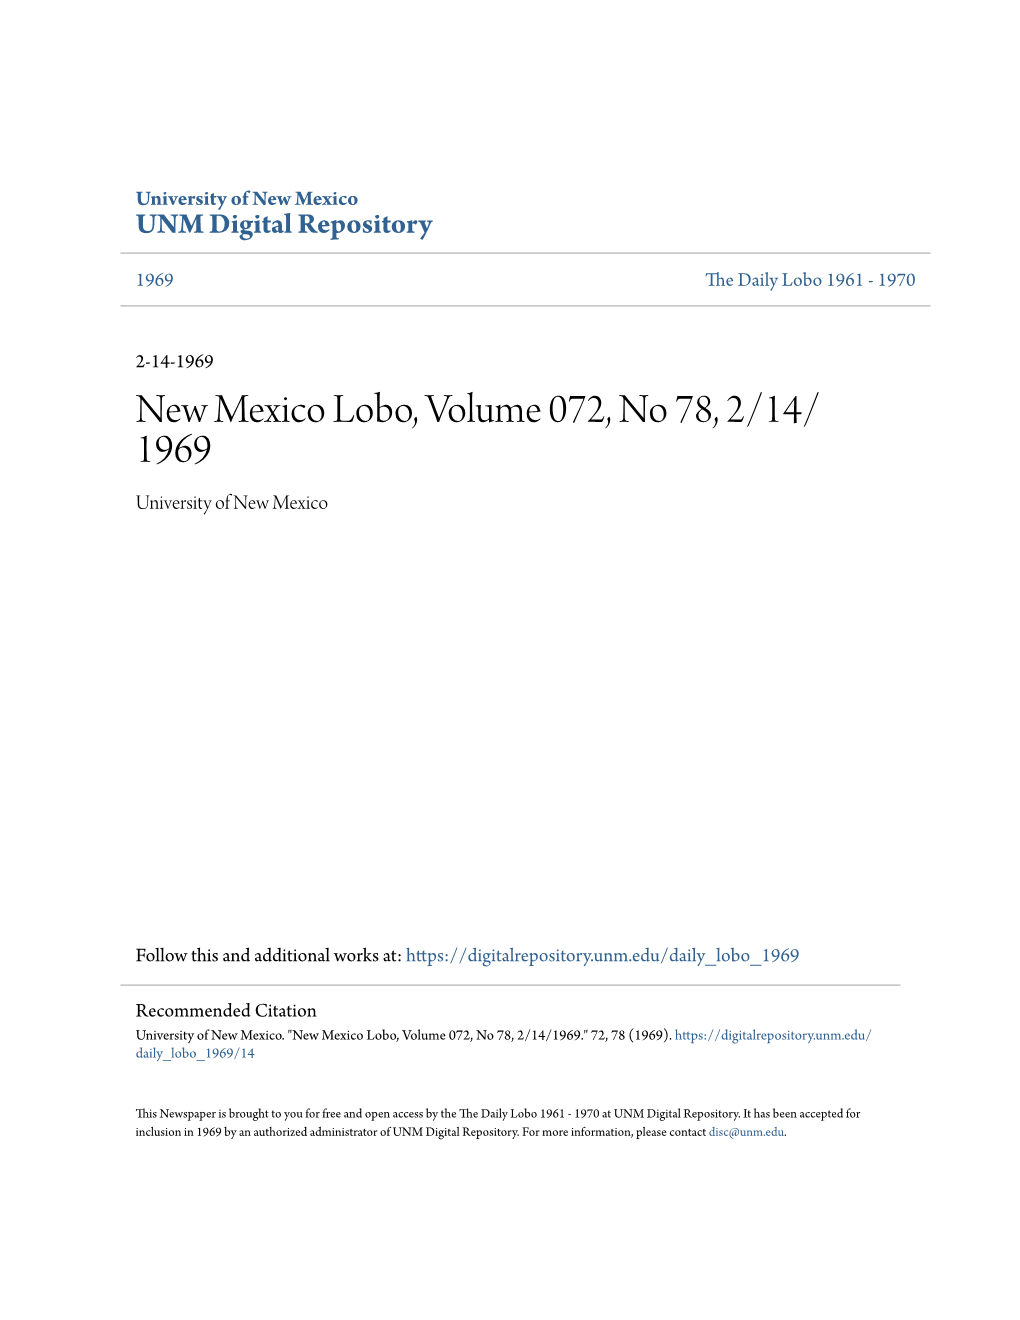 New Mexico Lobo, Volume 072, No 78, 2/14/1969." 72, 78 (1969)